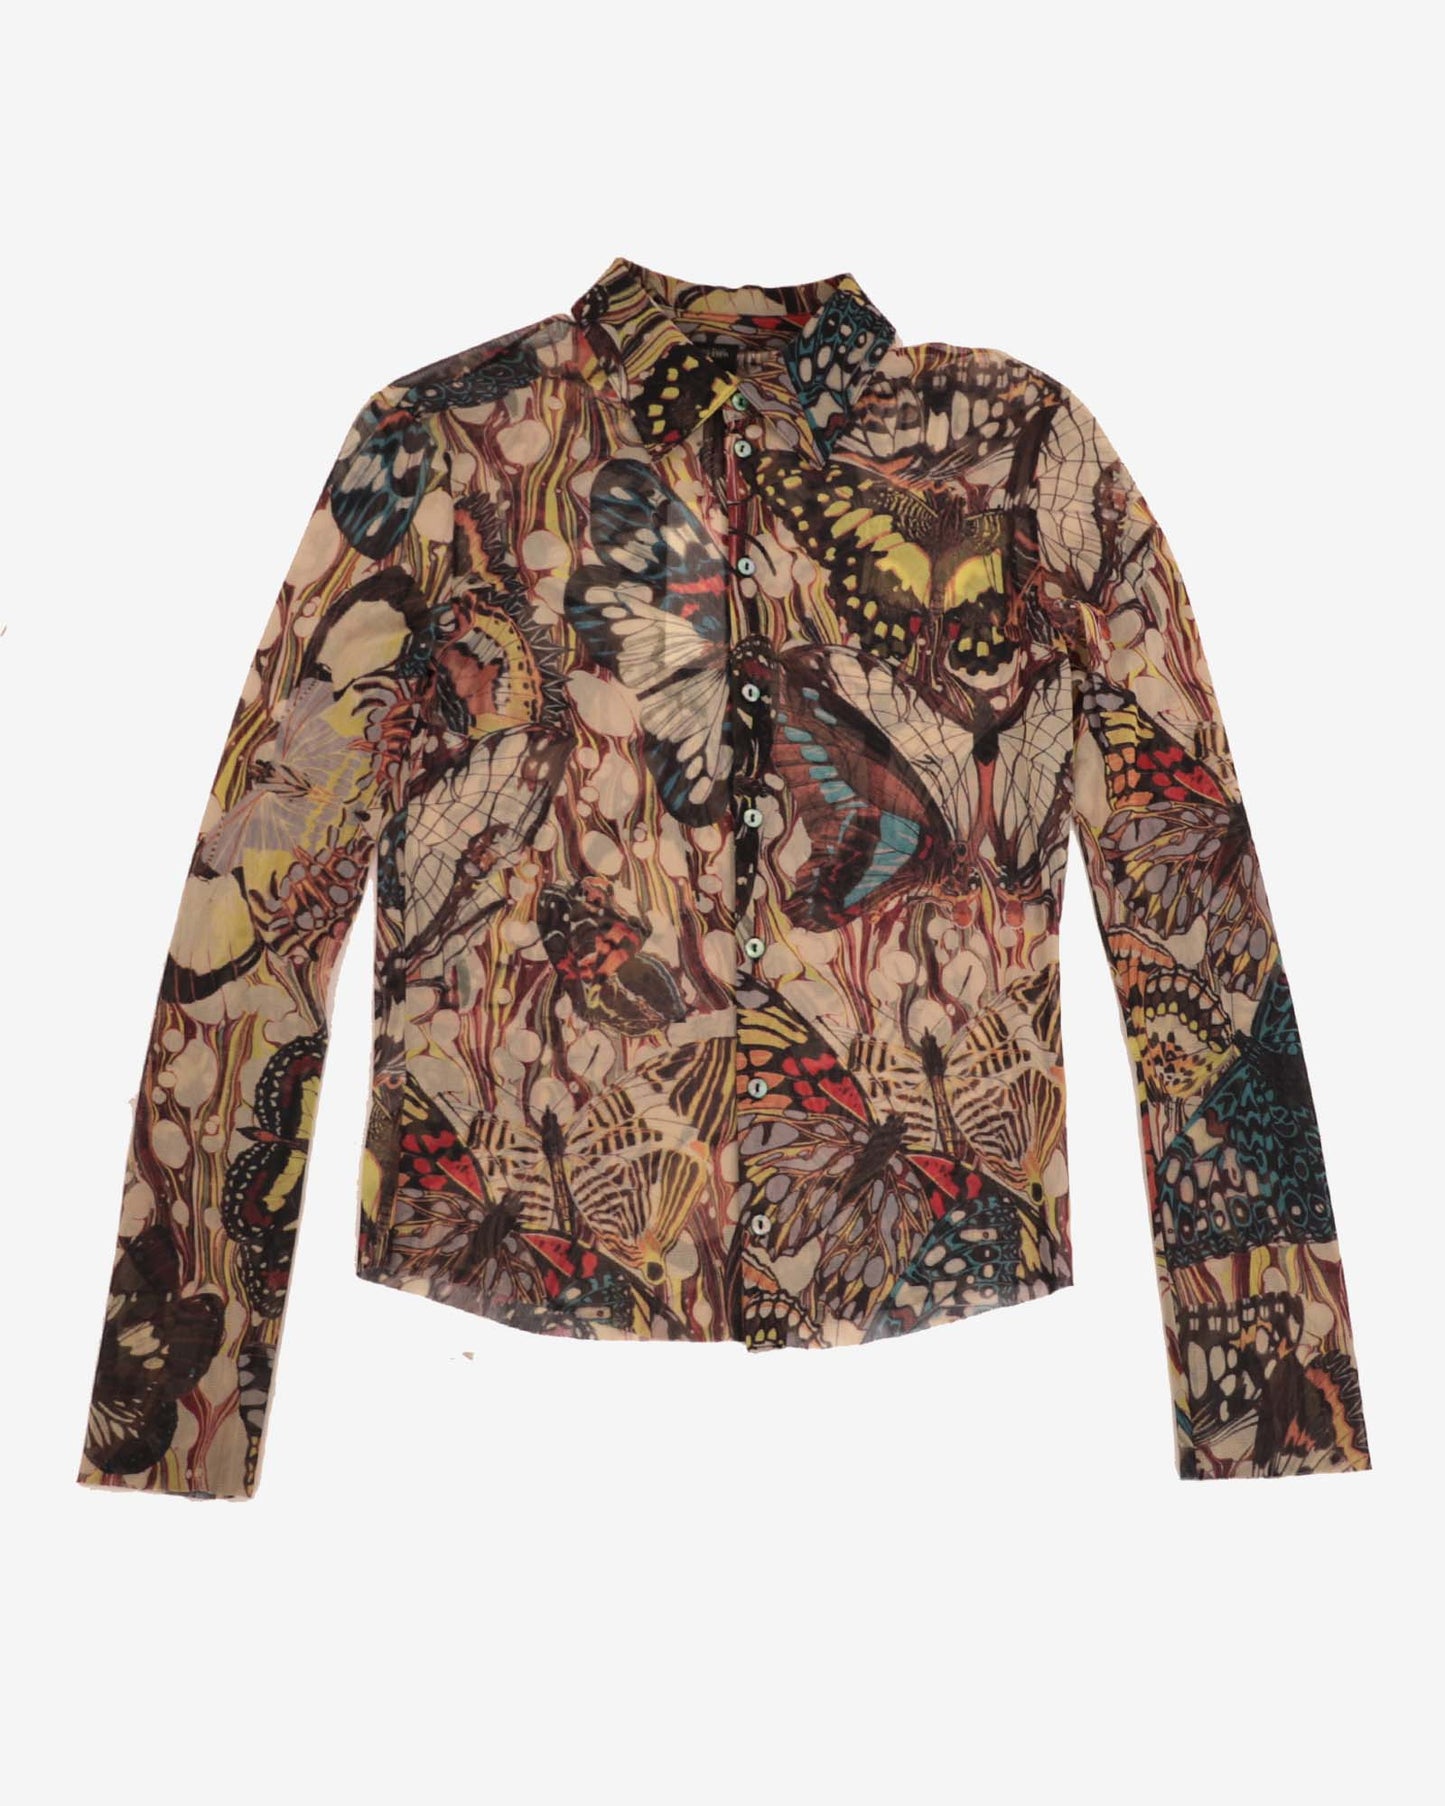 Jean Paul Gaultier Vintage Shirt